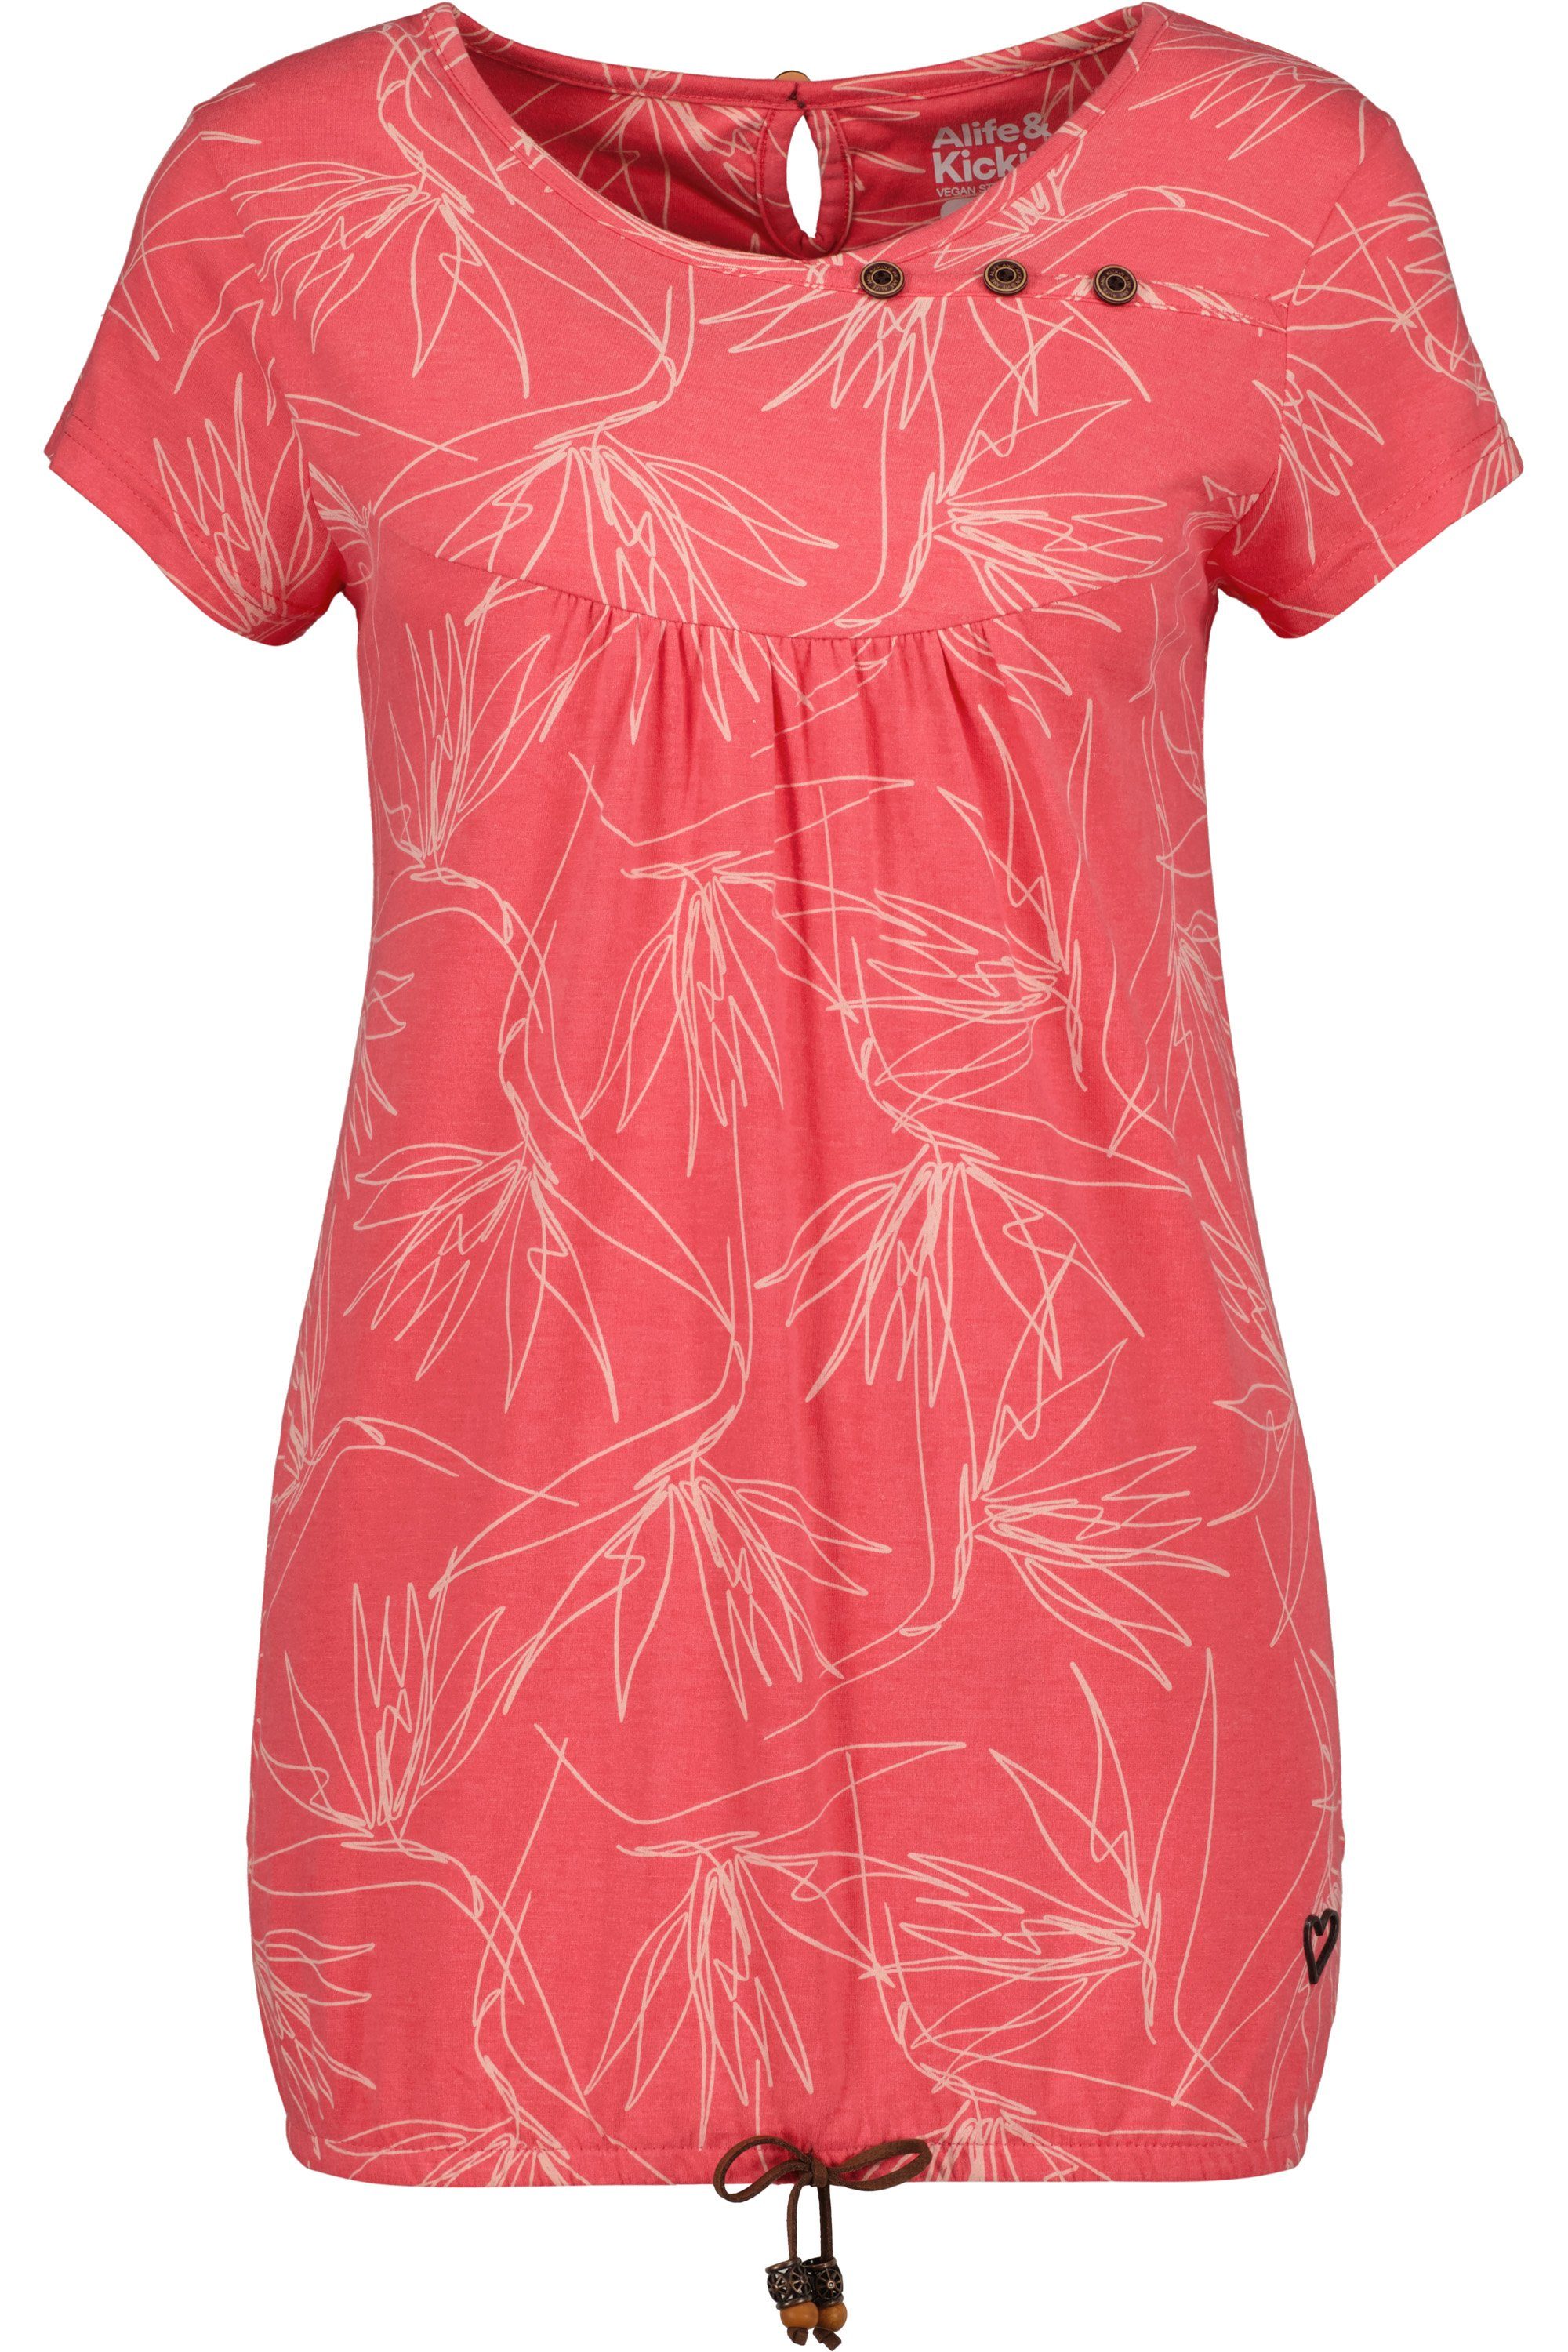 Alife & Kickin Rundhalsshirt coral Damen B SummerAK Kurzarmshirt, Shirt Shirt melange